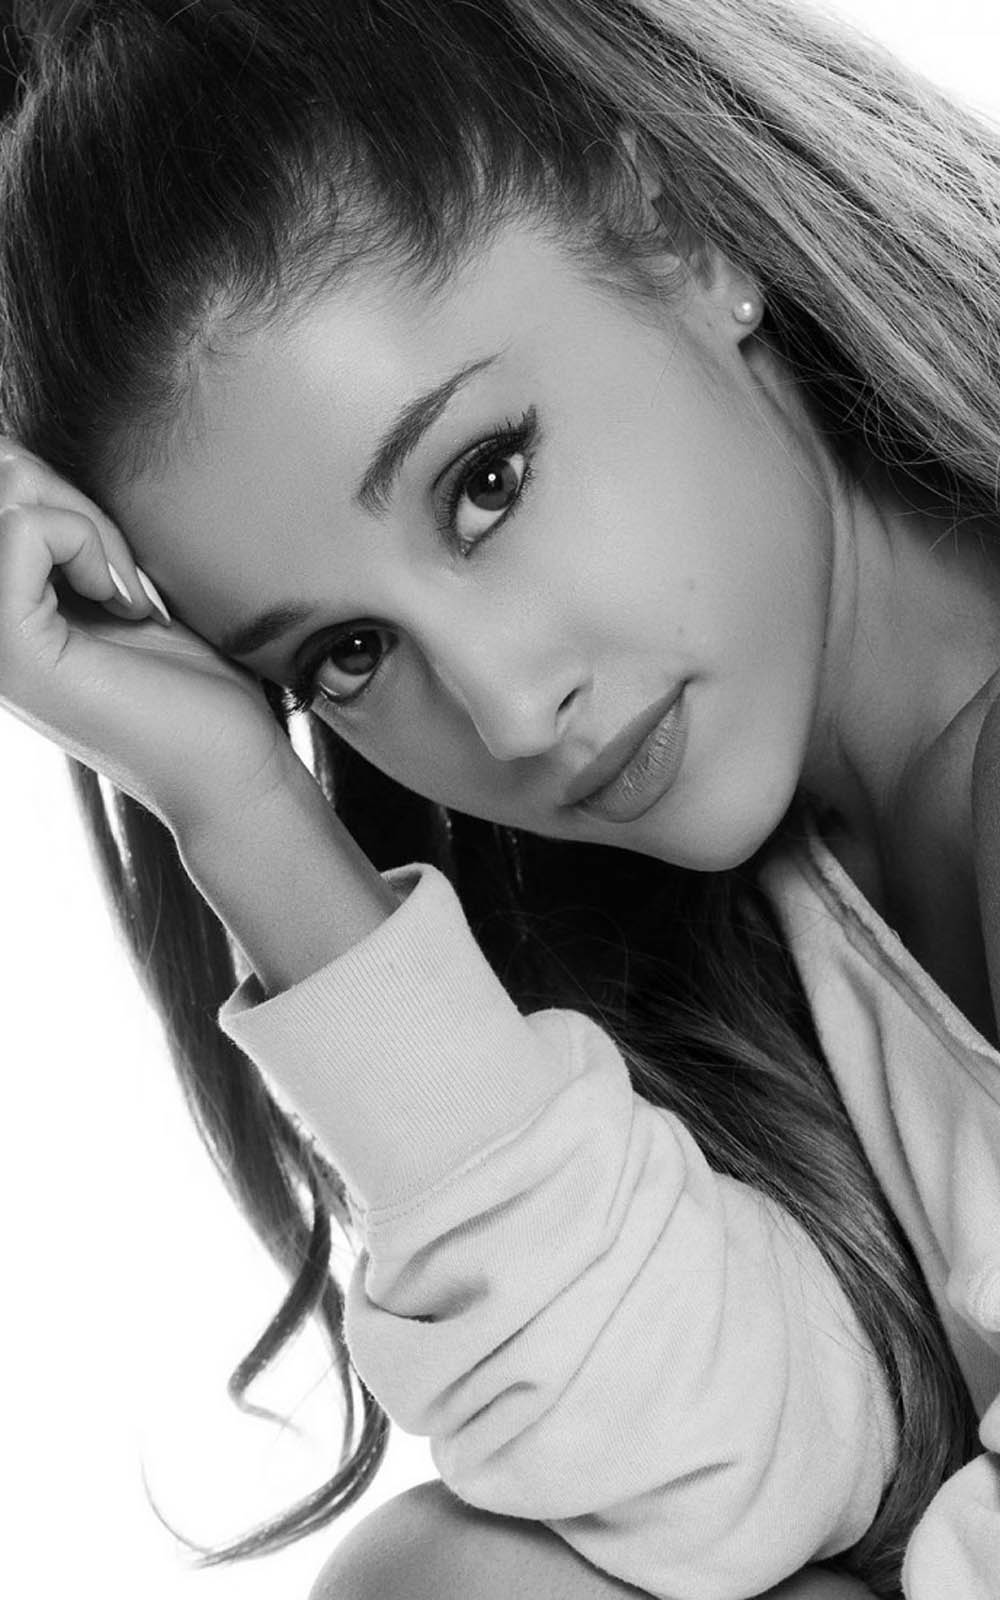 Ariana Grande Black And White Free 4k Ultra Hd Mobile Wallpaper